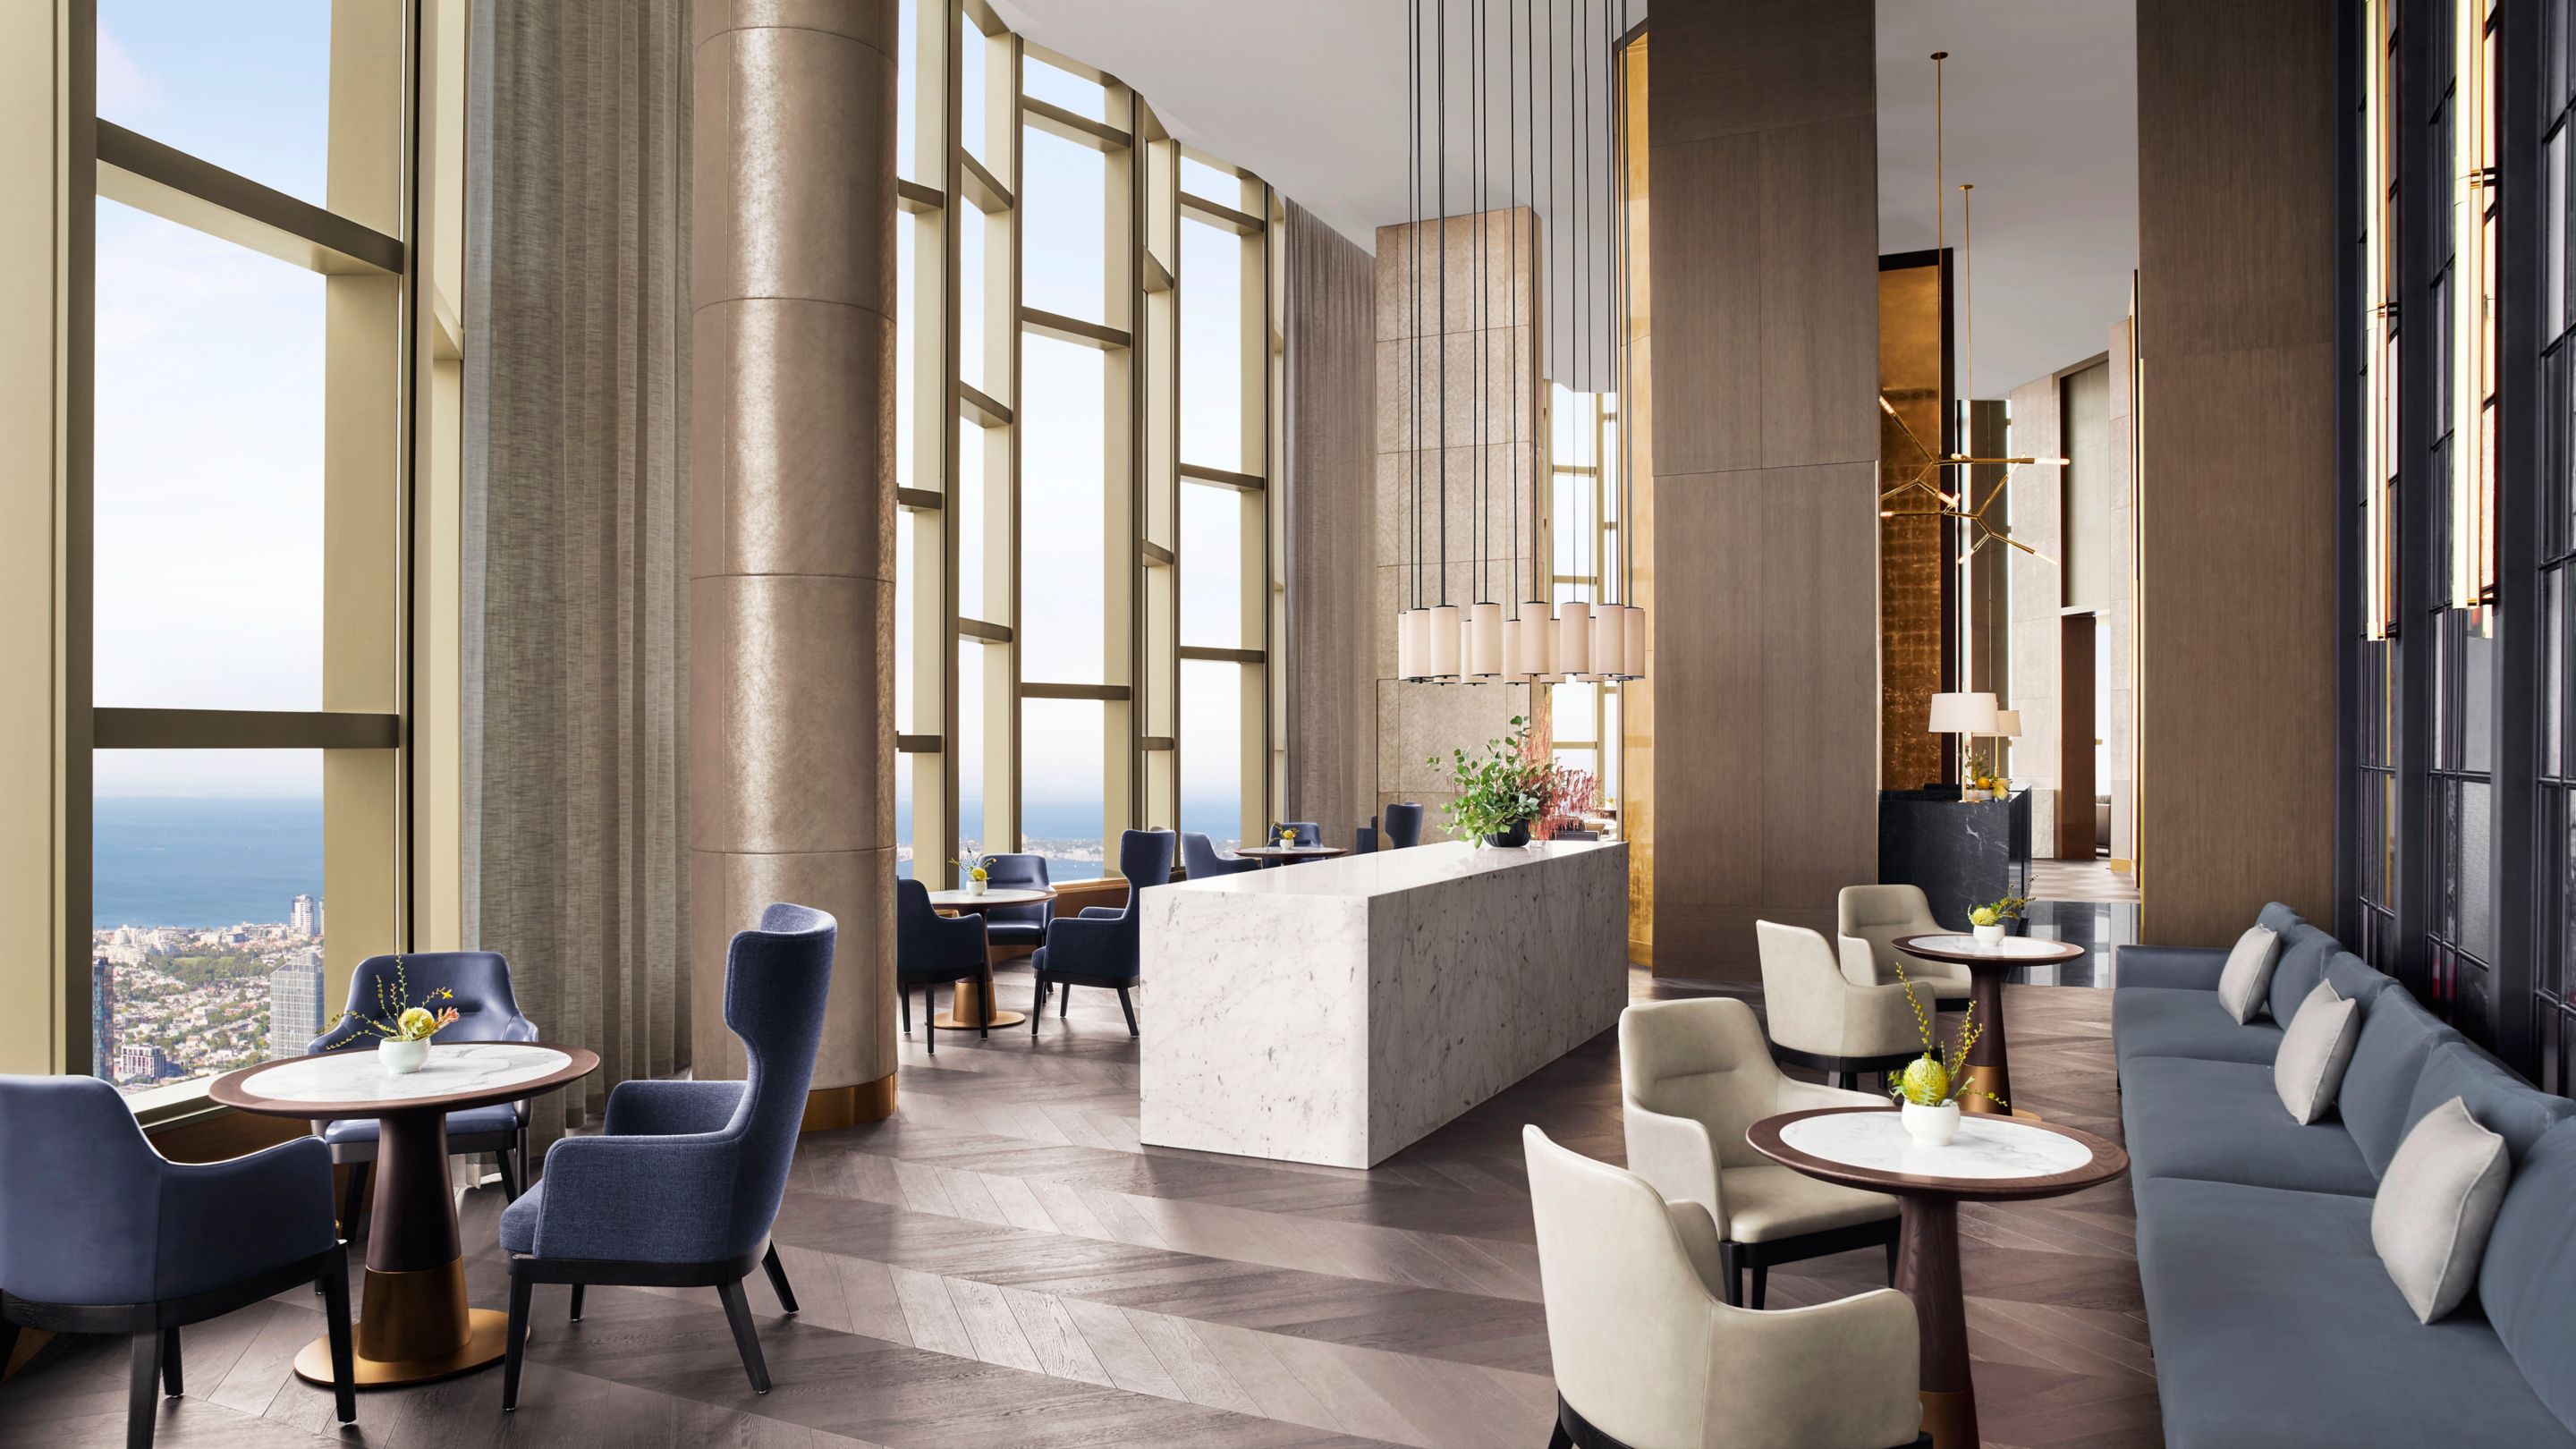 The Ritz-Carlton, Lounge area